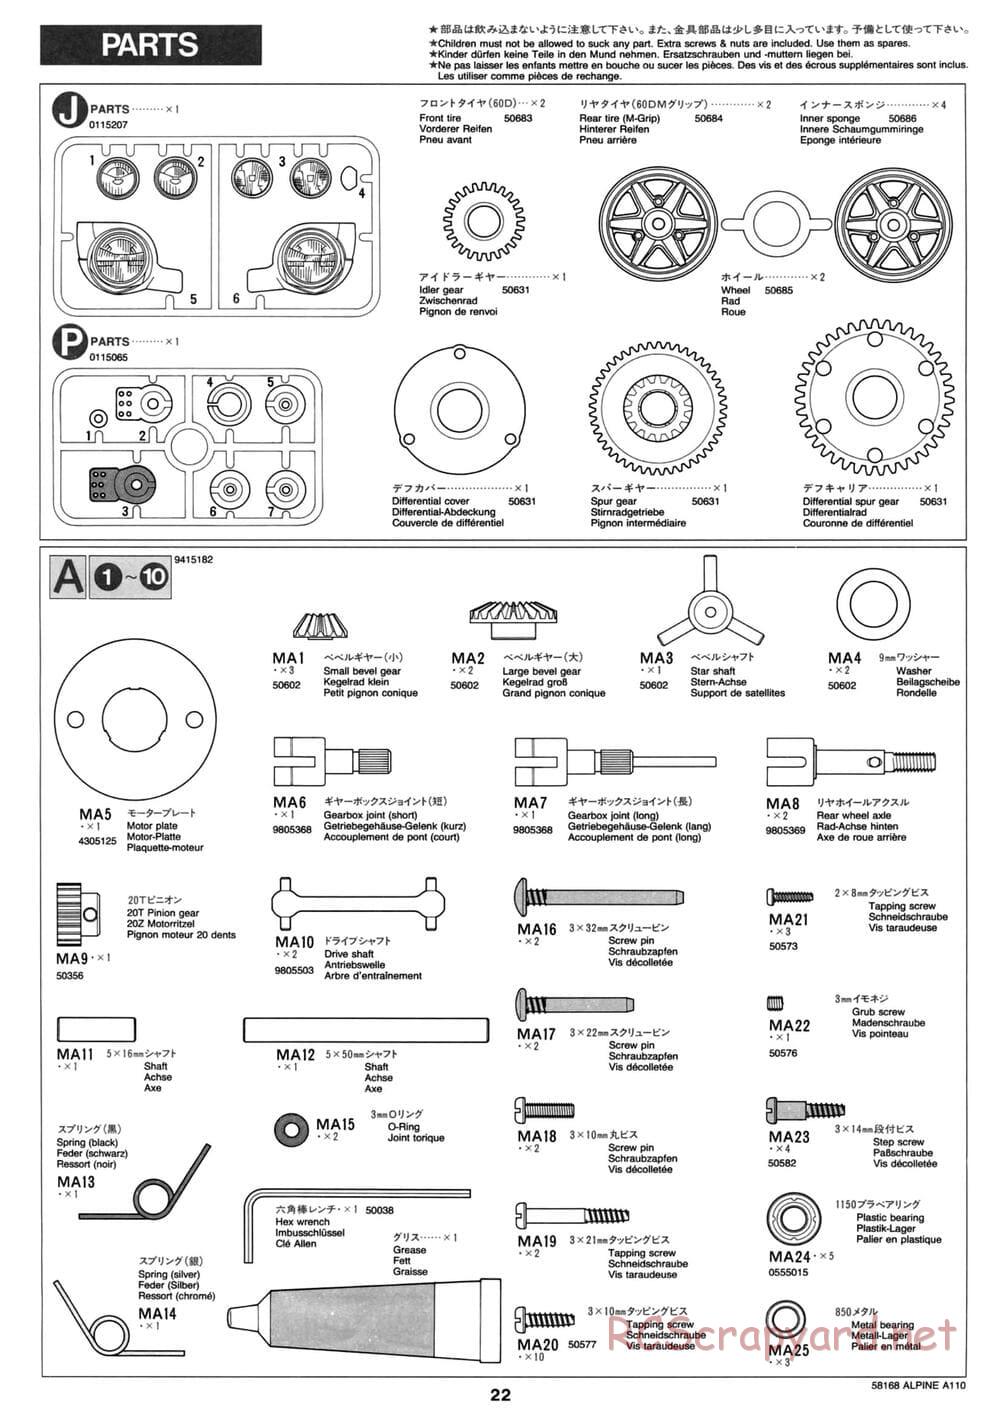 Tamiya - Alpine A110 - M02 Chassis - Manual - Page 22